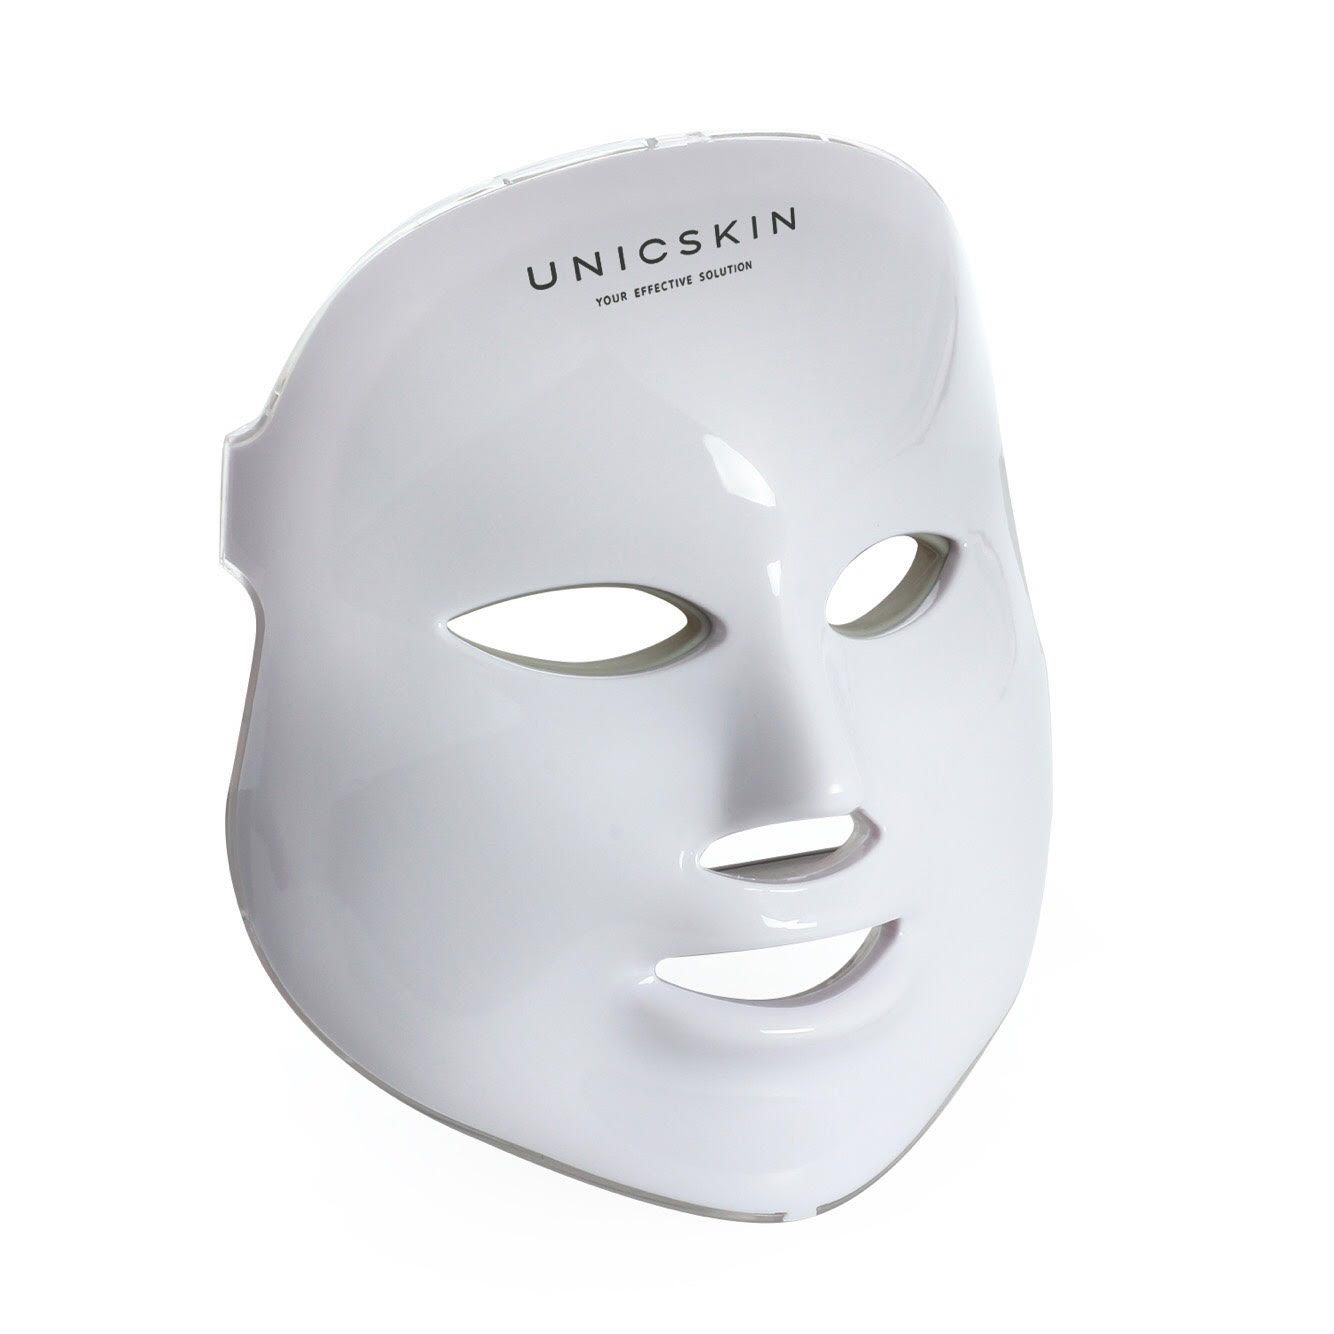 Coneixes la màscara Unicskin Unicled Korean Mask?